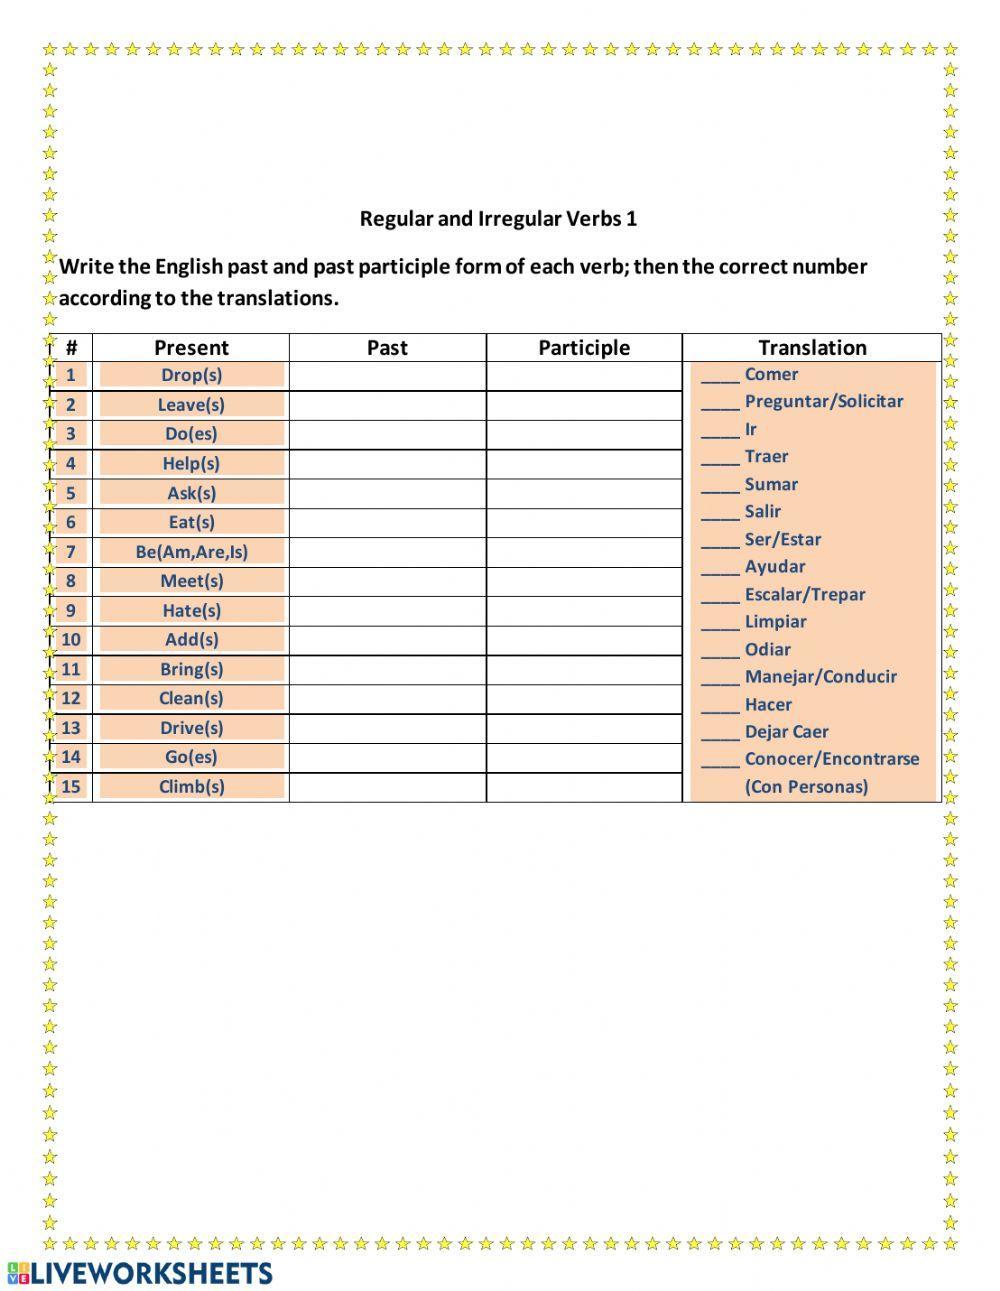 Regular and Irregular verbs 1